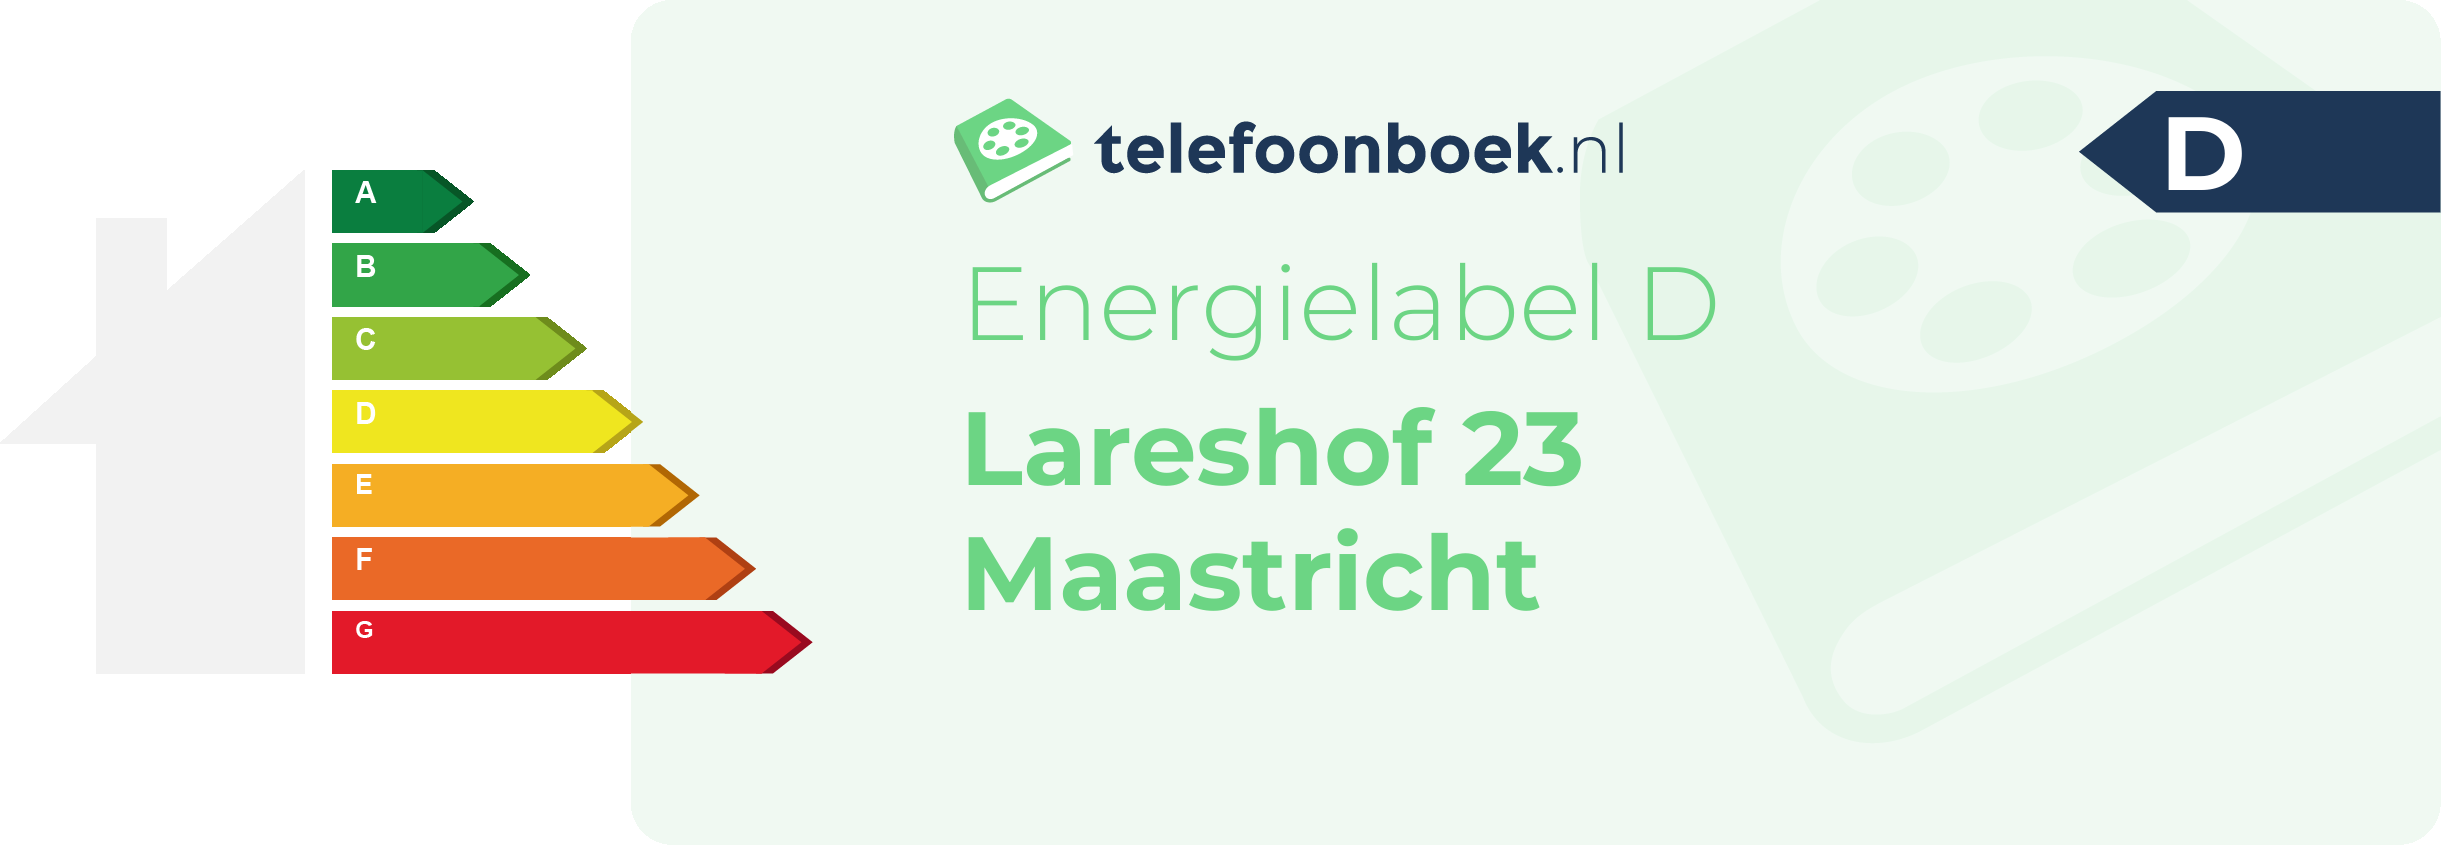 Energielabel Lareshof 23 Maastricht